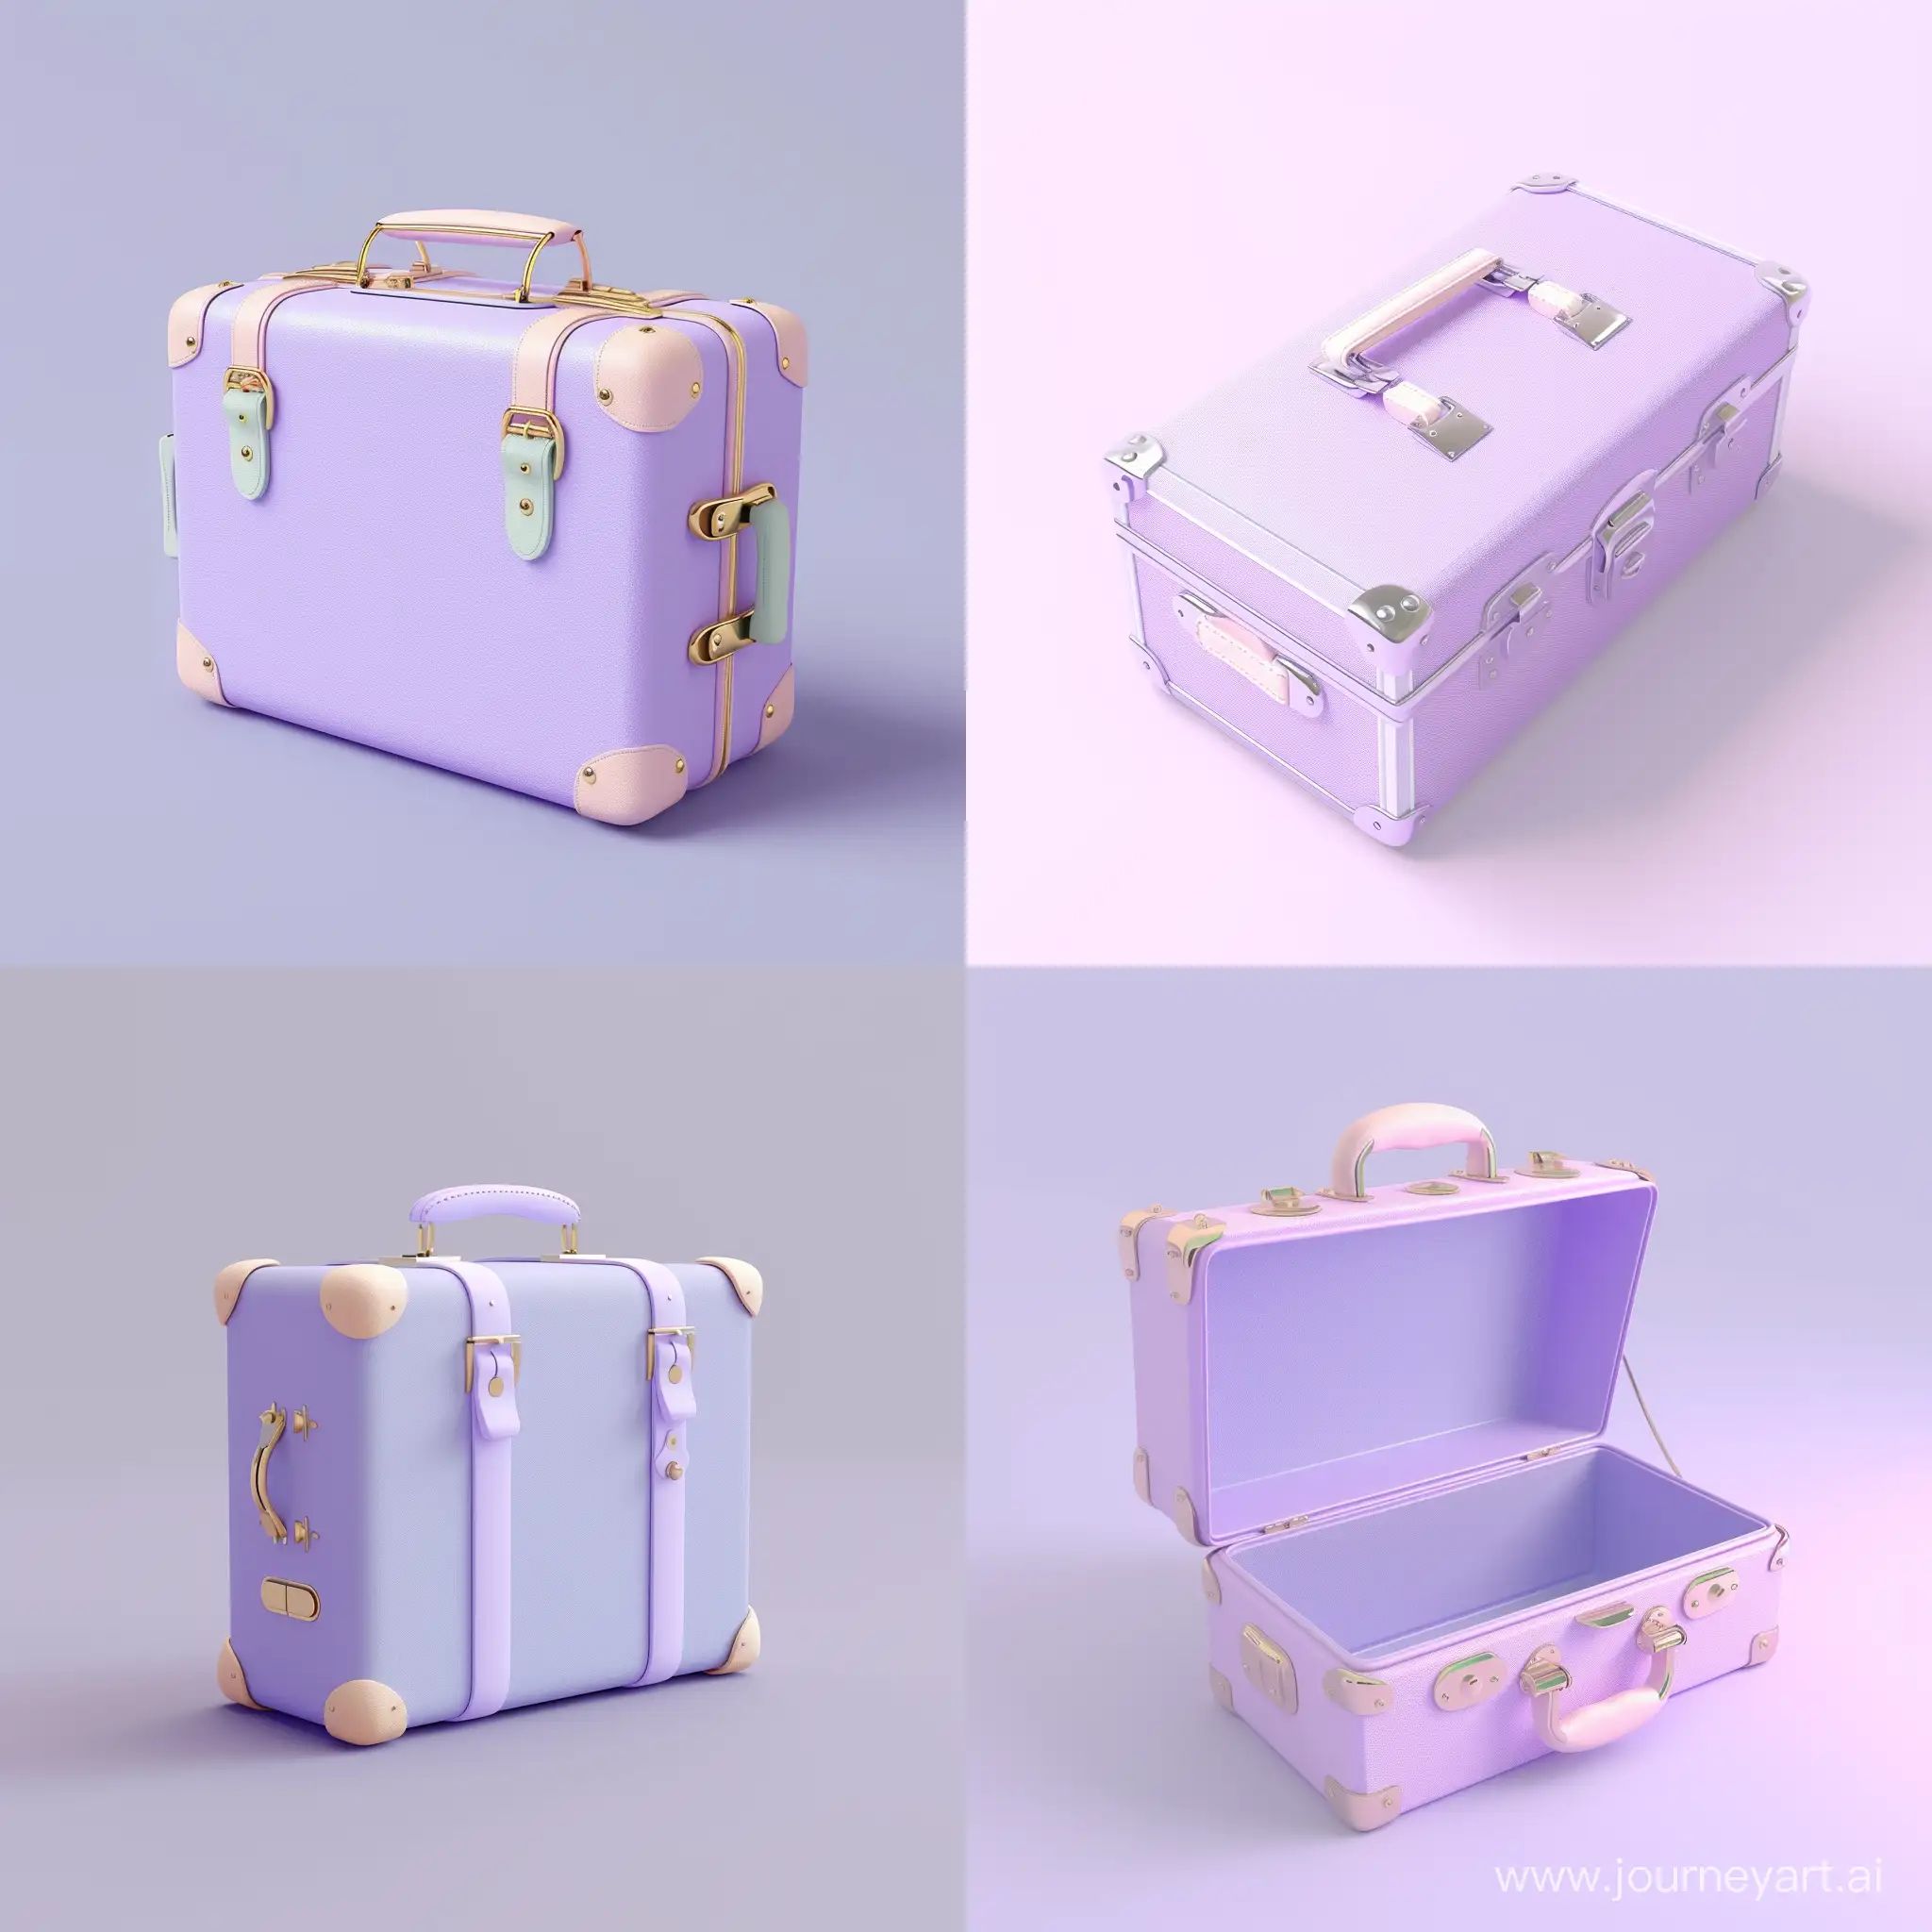 Stylish-Purple-Suitcase-in-Pastel-3D-Digital-Illustration